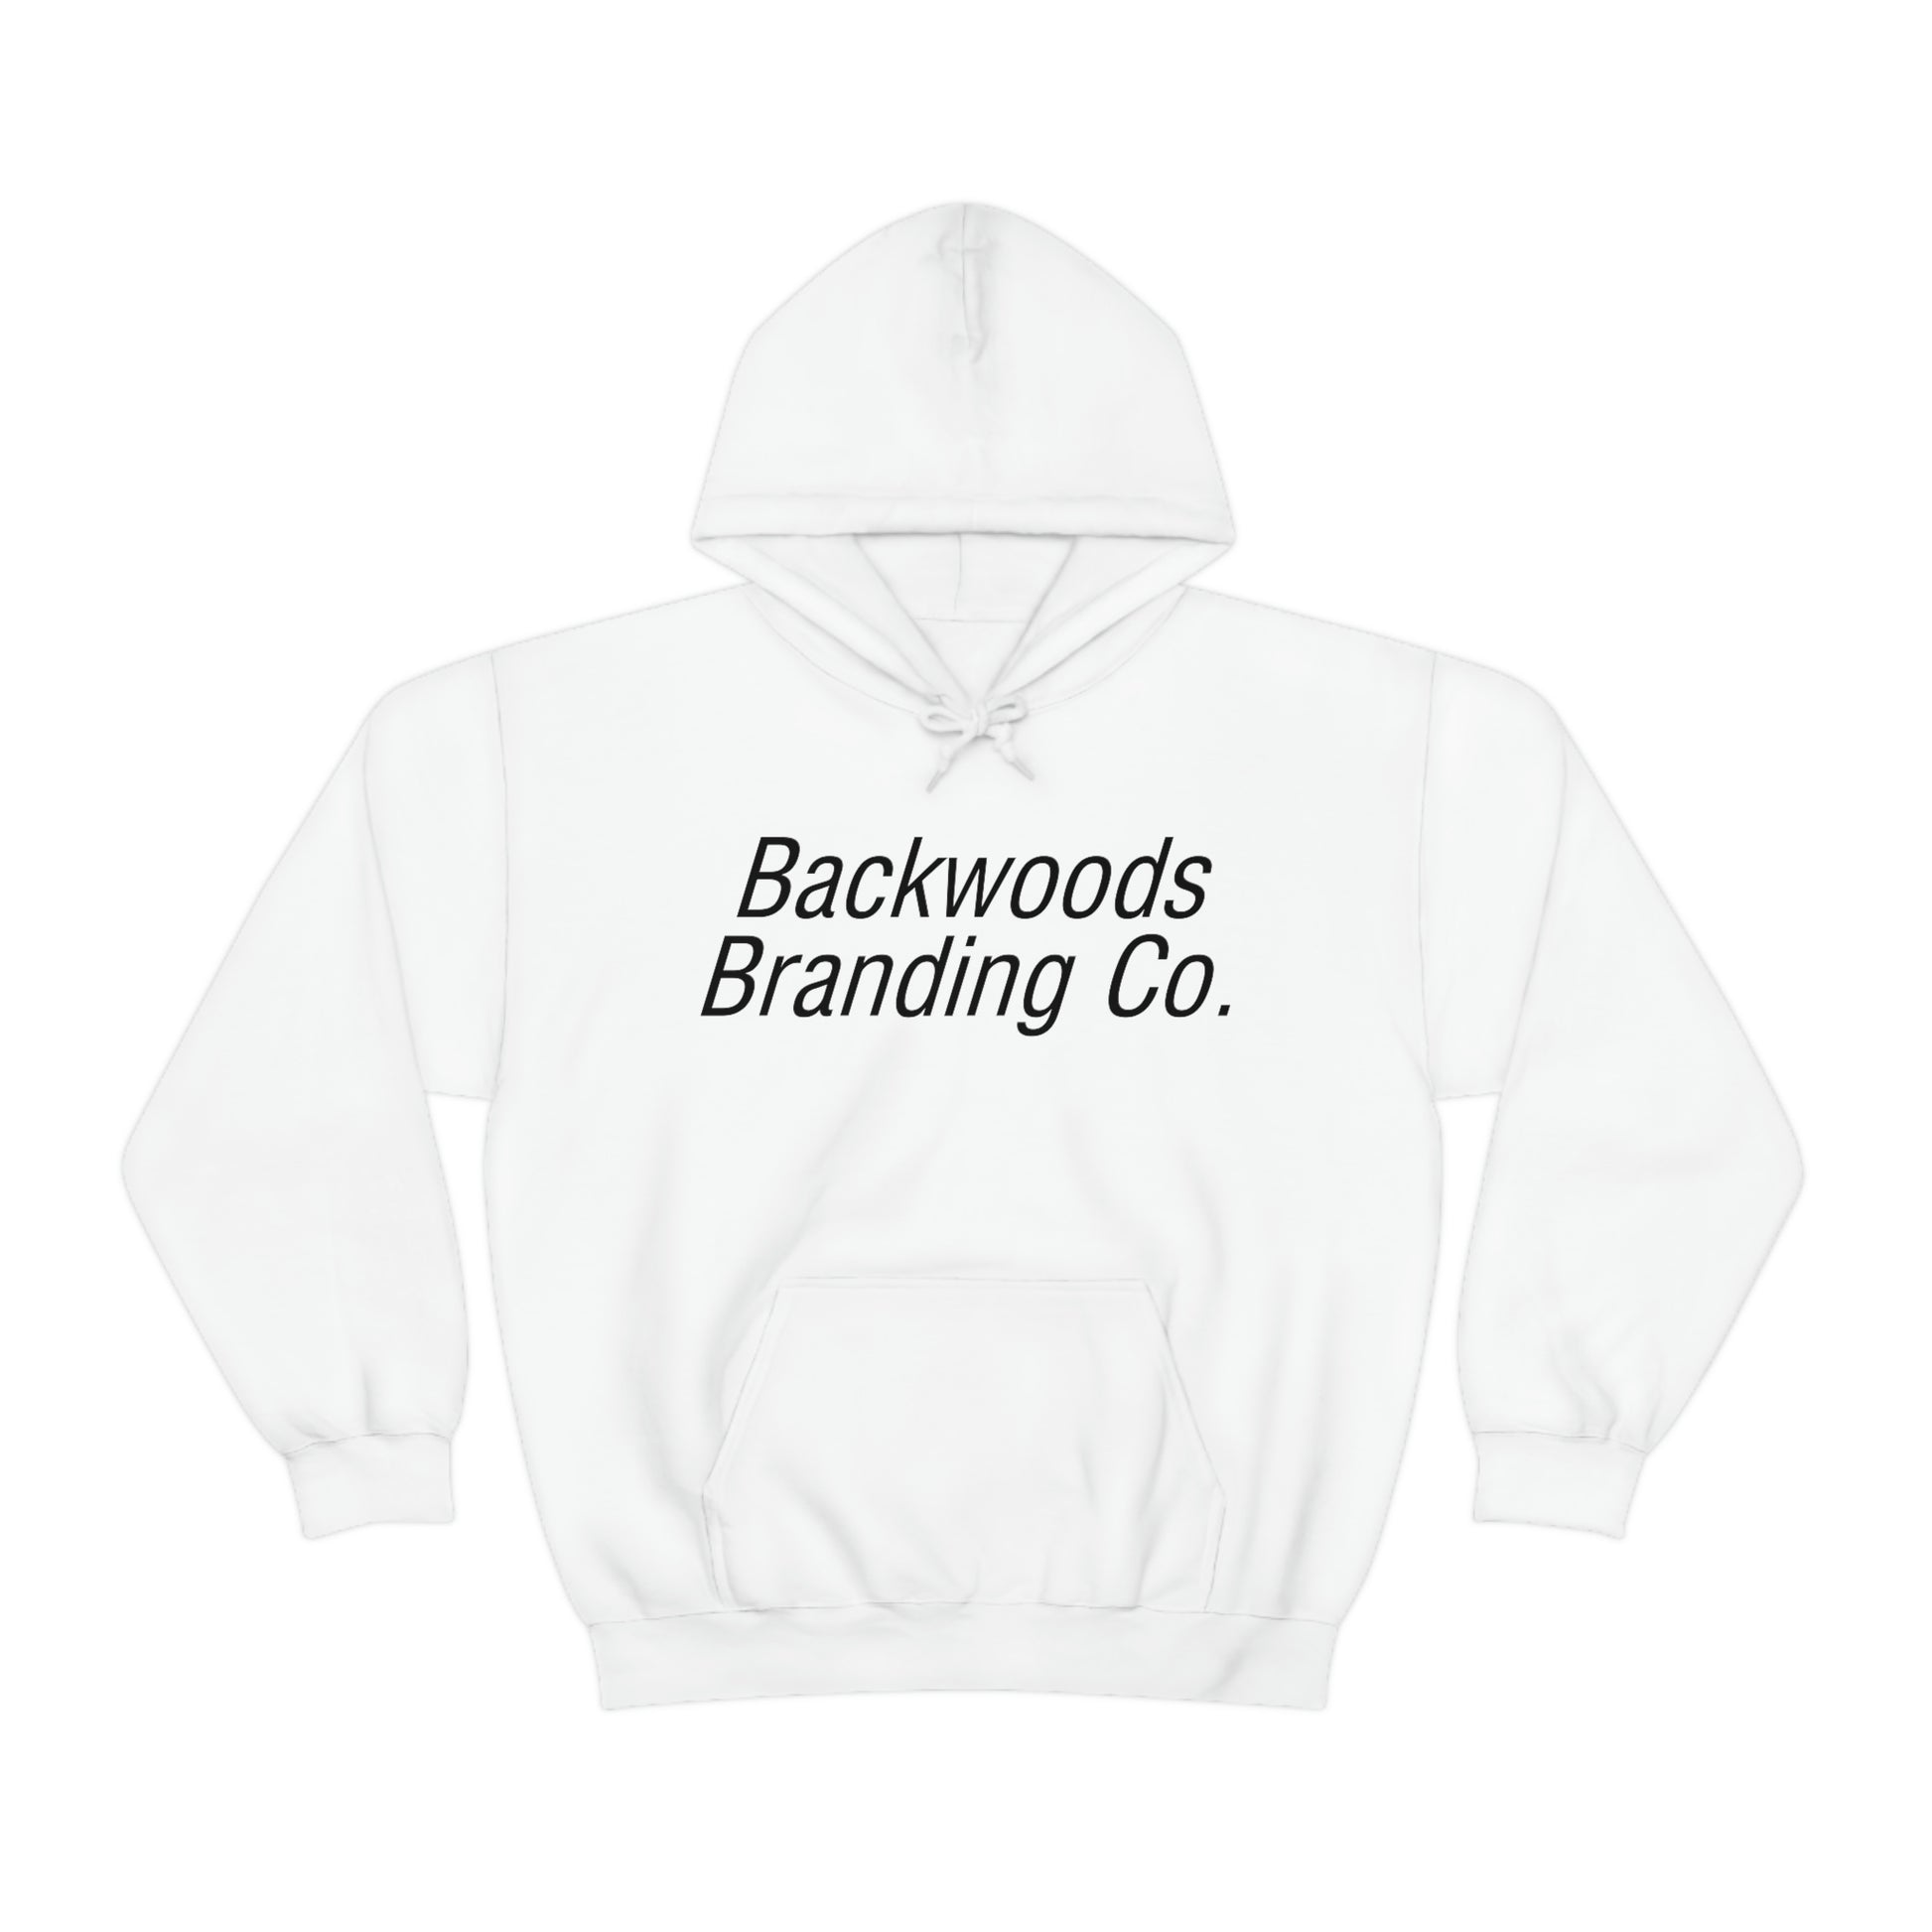 Backwoods Branding Hoodie - Backwoods Branding Co.